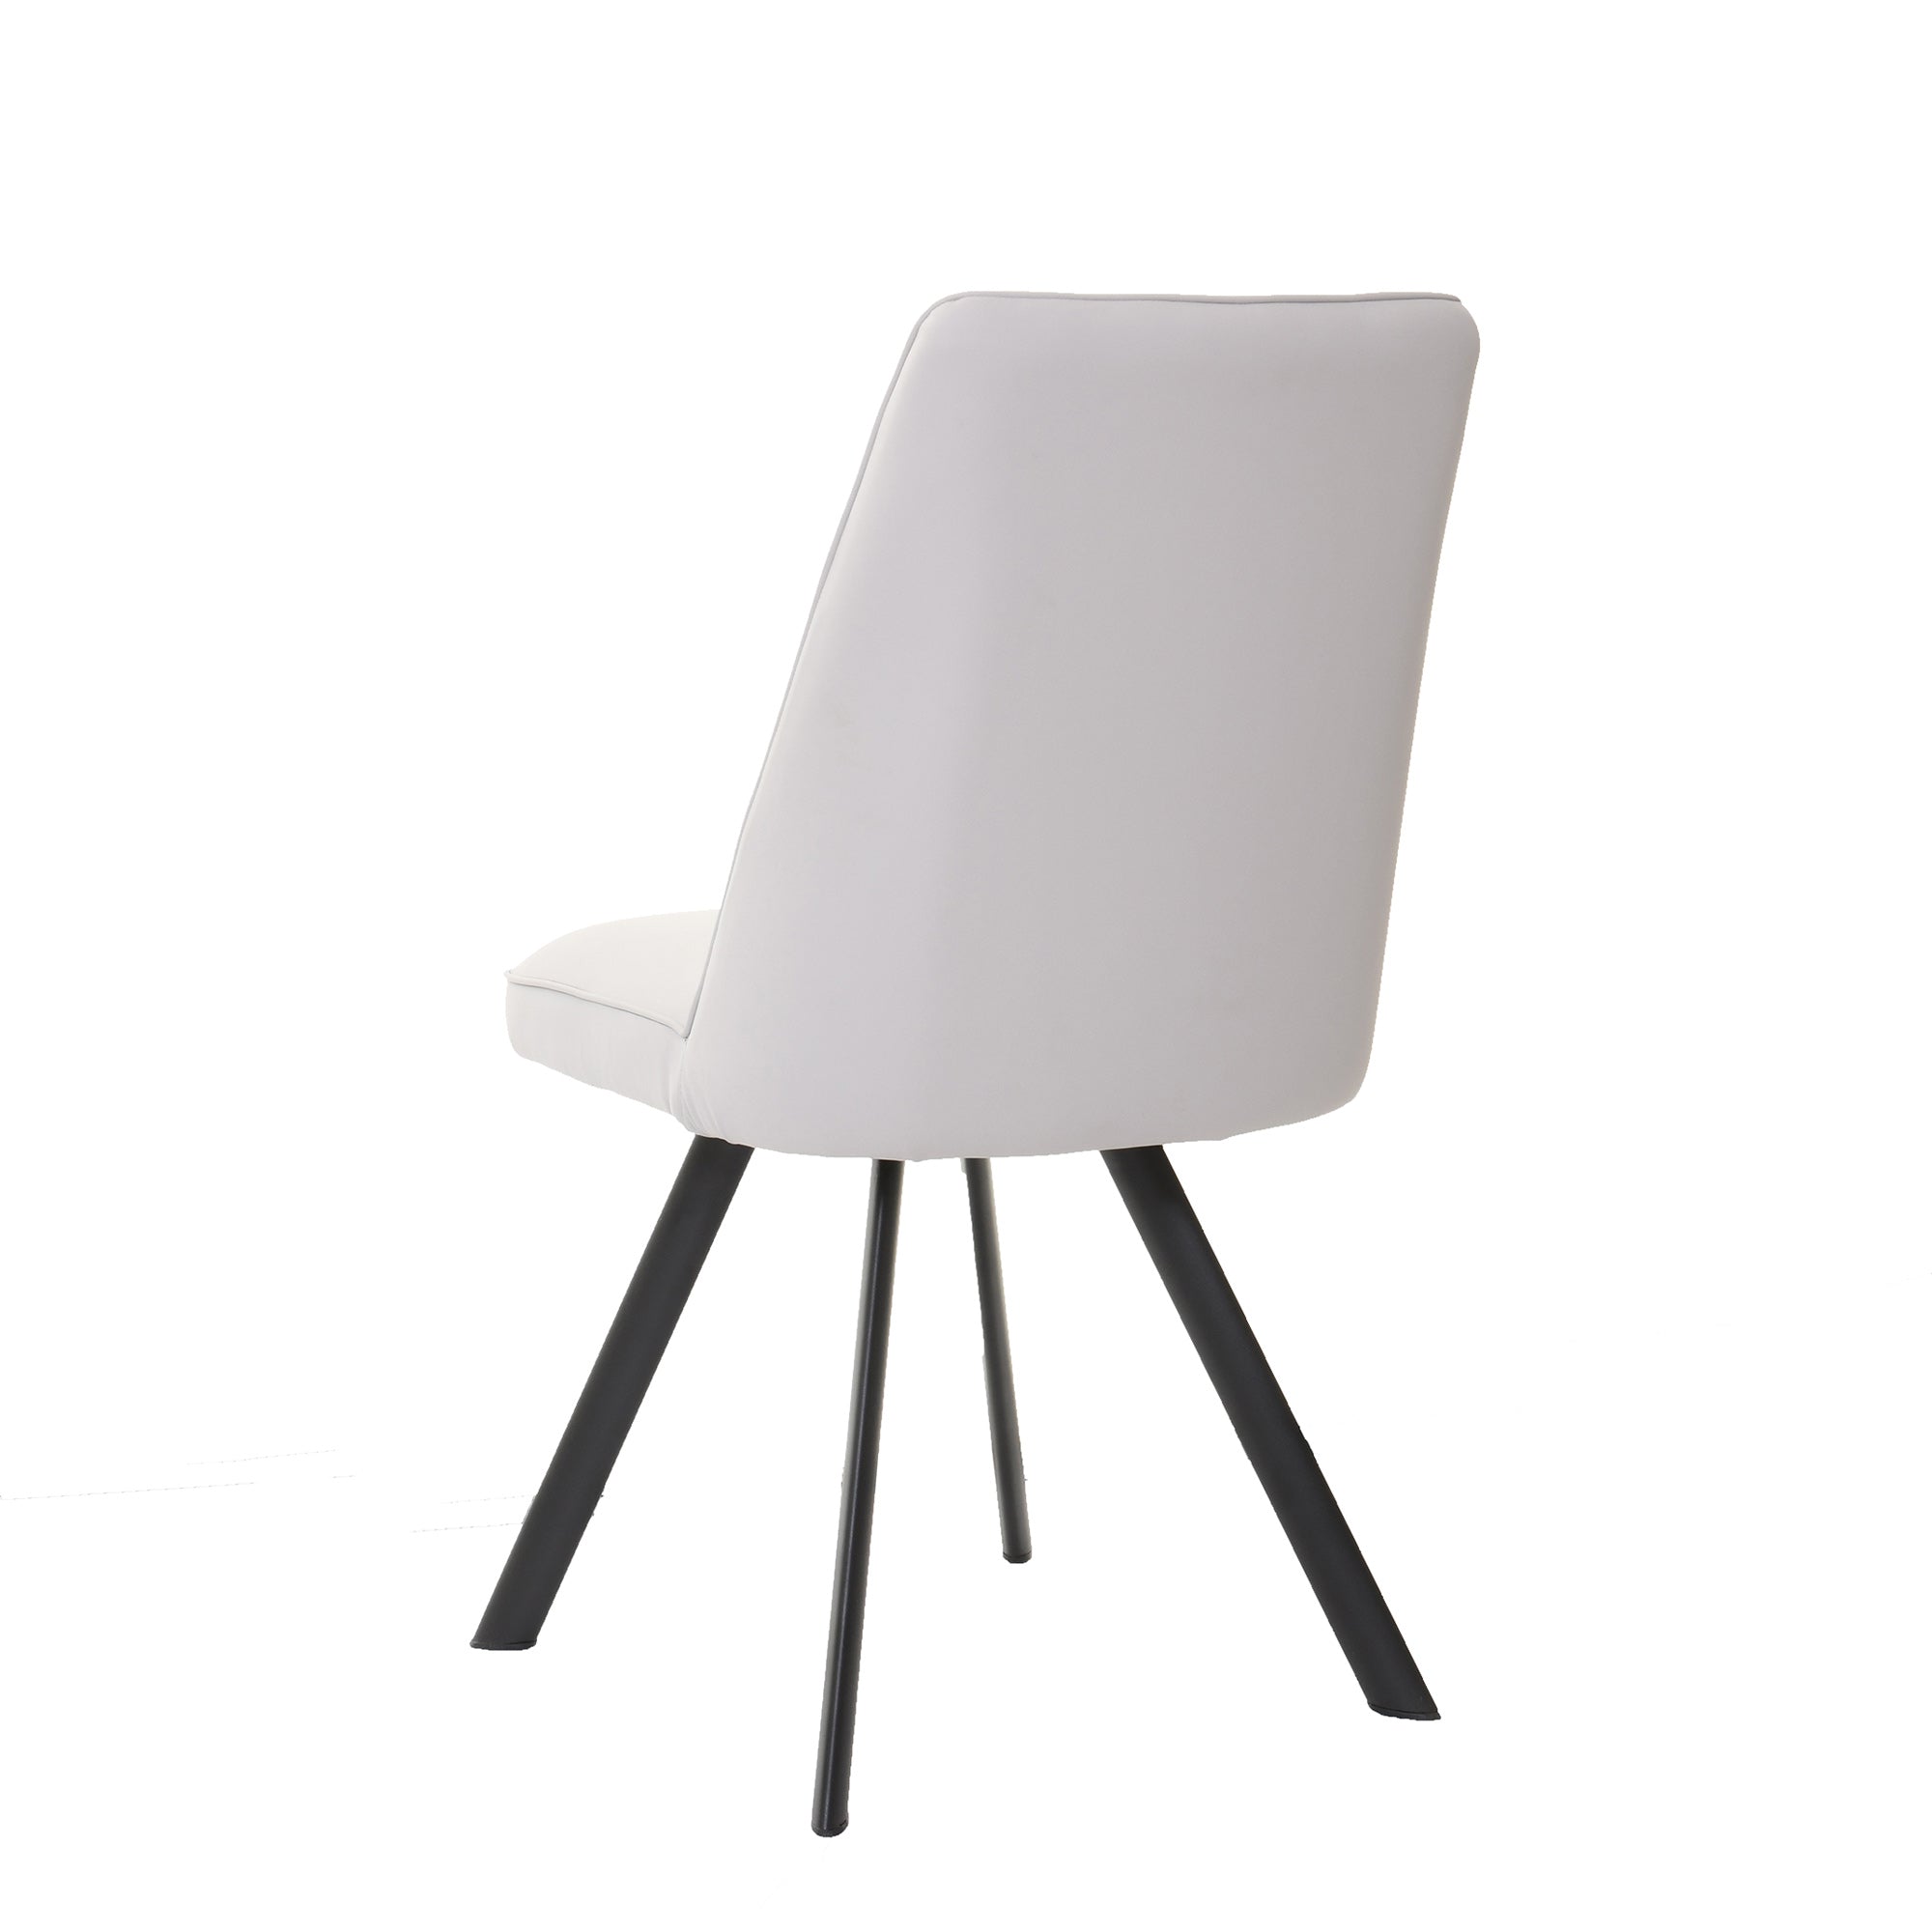 Pietro - Dining Chair PU Light Grey